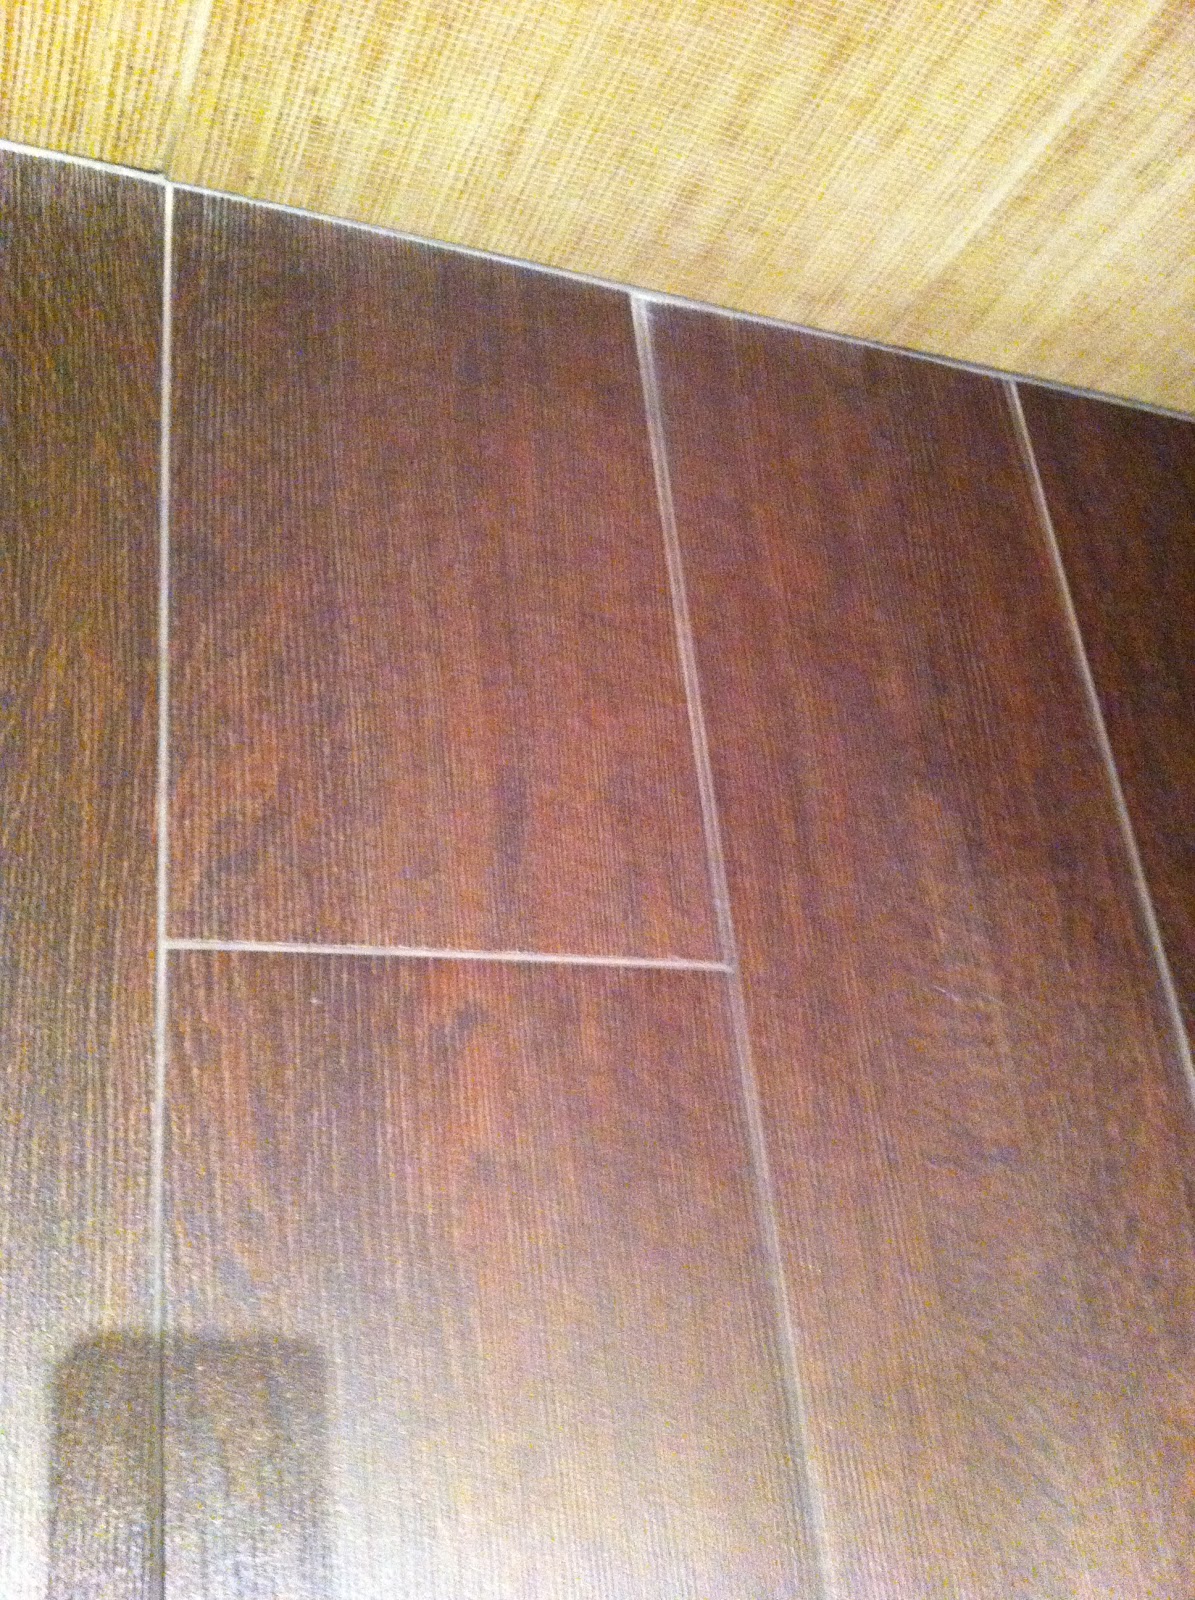 To da loos: Bamboo tiles and fake wood floor porcelaine tiled bathroom